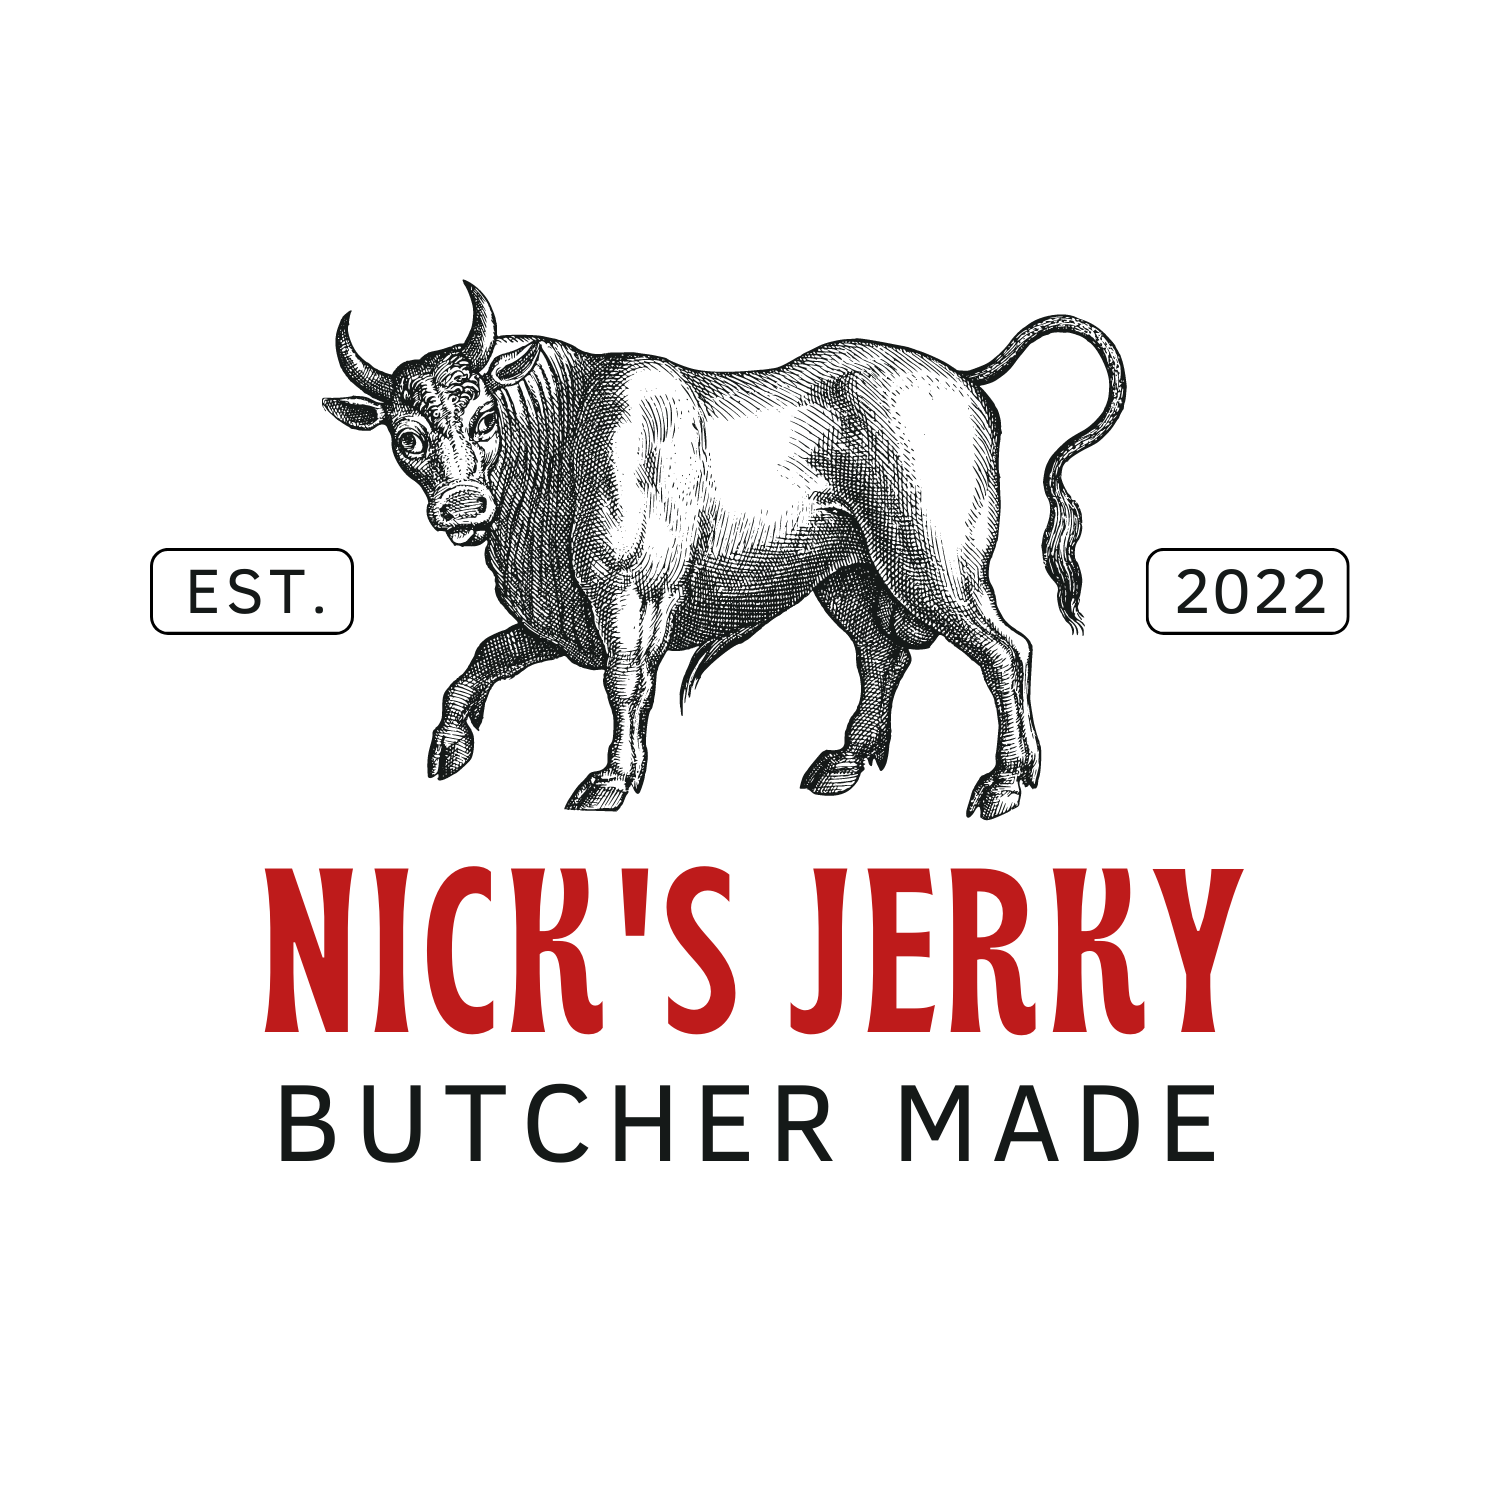 Nick's Jerky logo